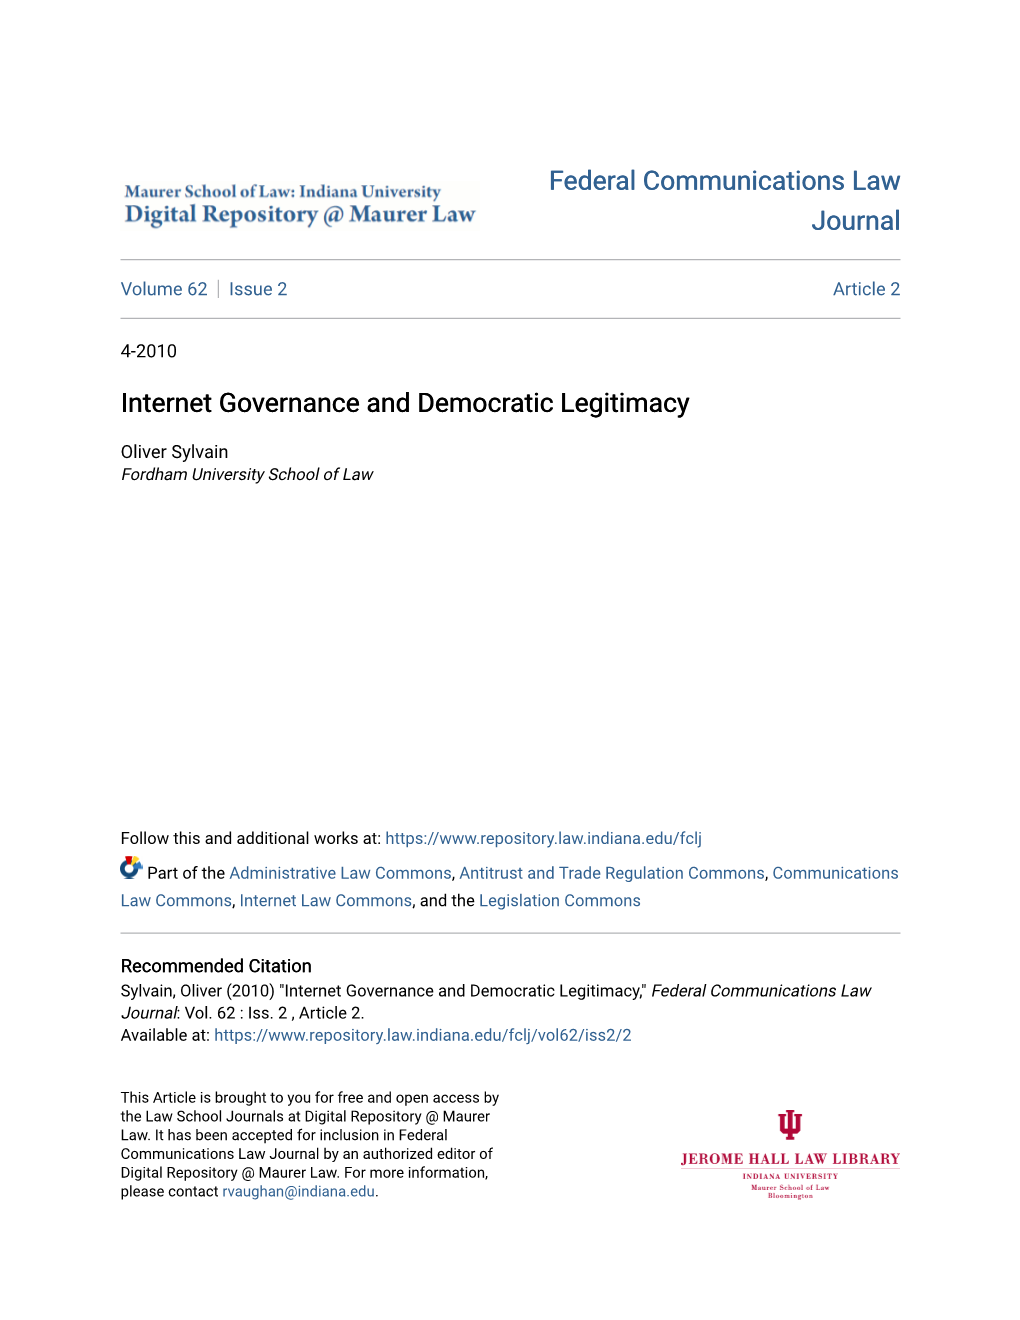 Internet Governance and Democratic Legitimacy